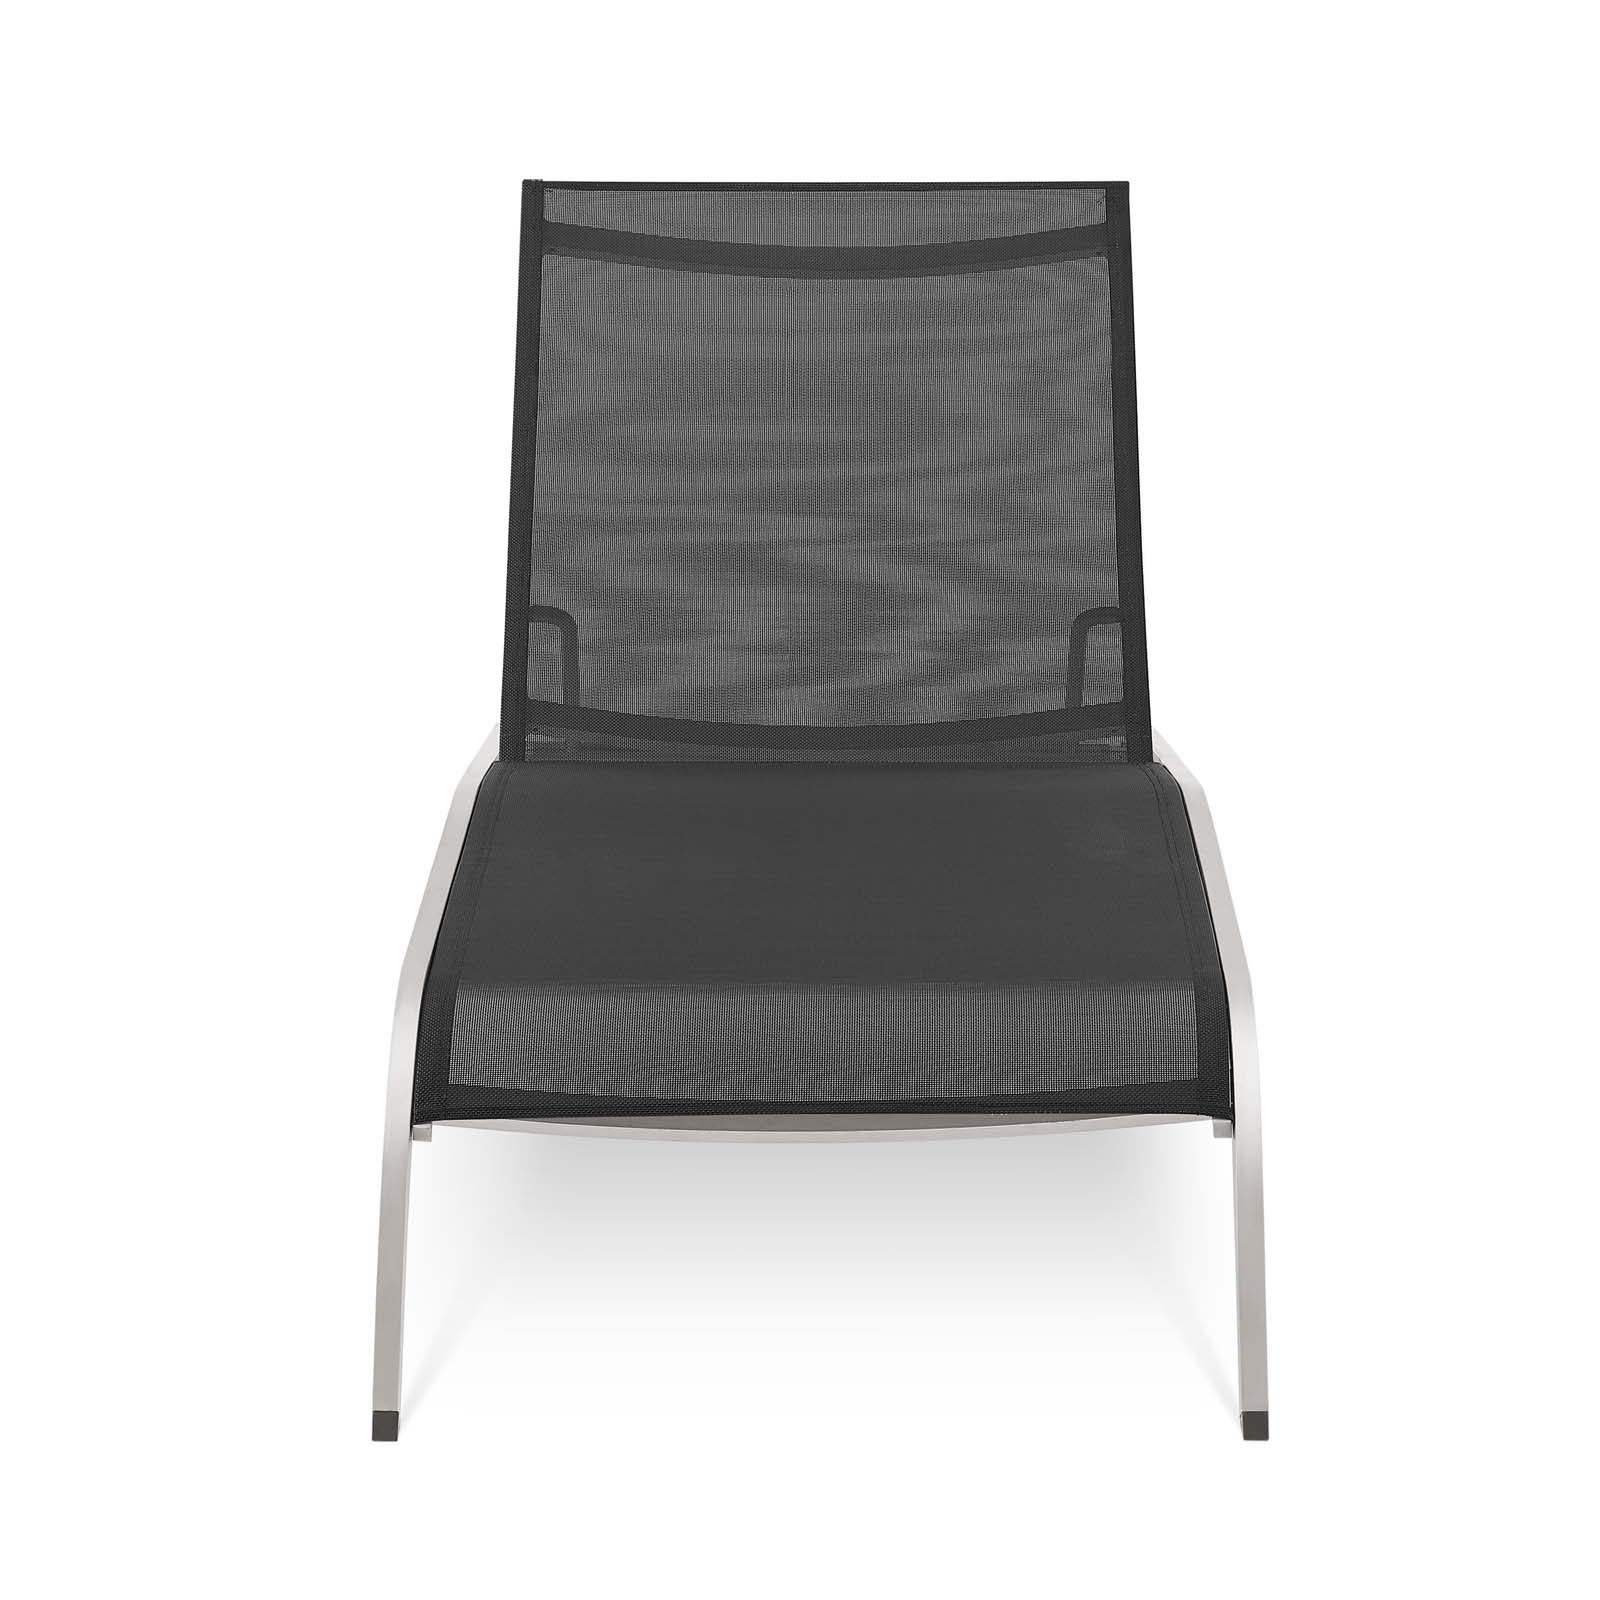 Contemporary Modern Urban Designer Outdoor Patio Balcony Garden Furniture Lounge Lounge Chair, Aluminum, Black - image 5 of 6